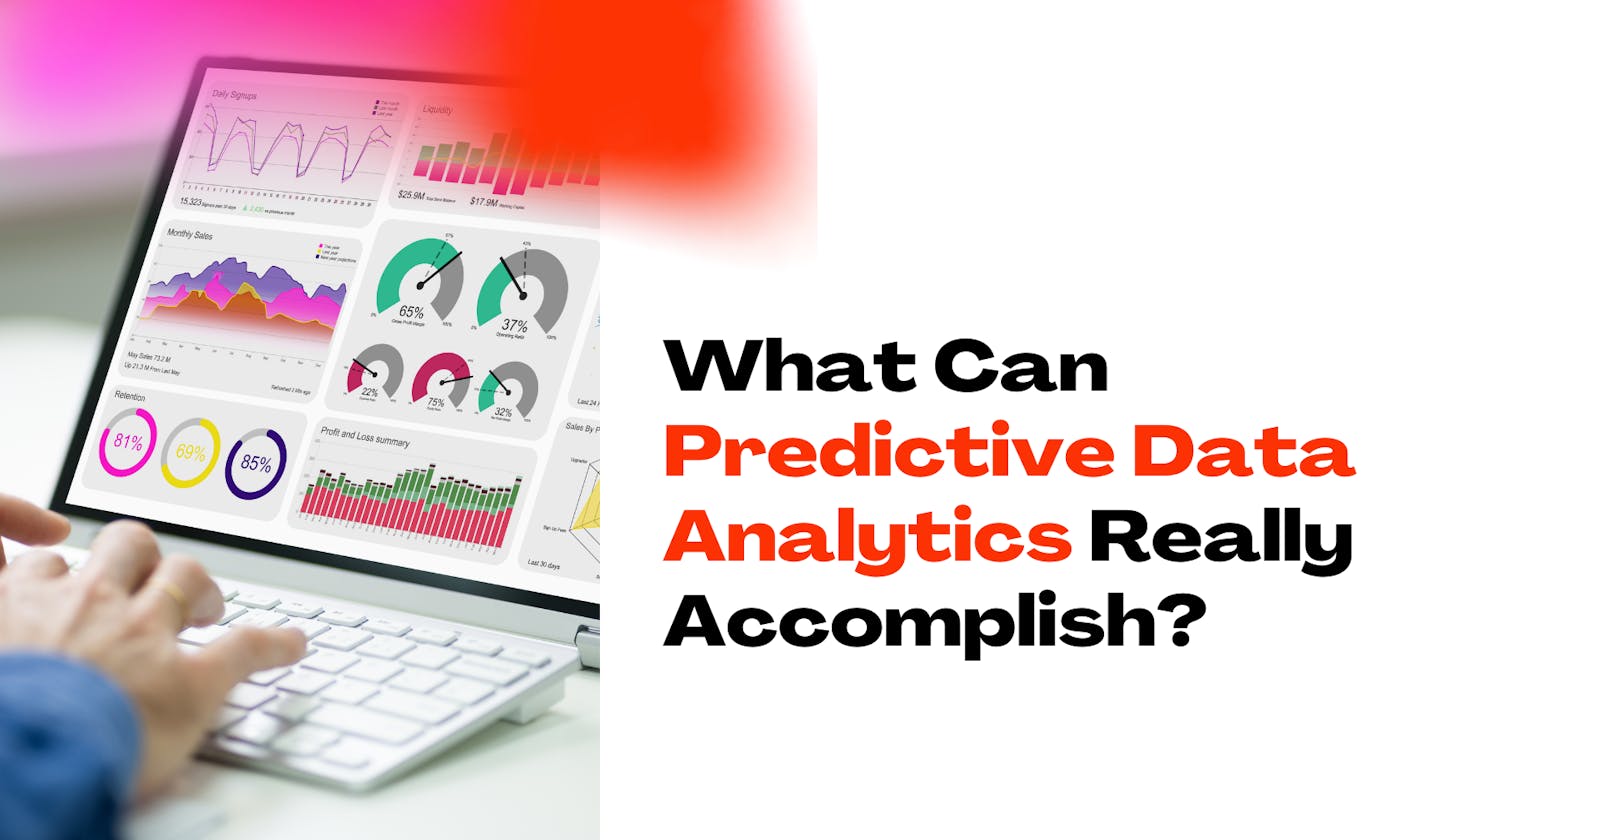 What Can Predictive Data Analytics Really Accomplish?